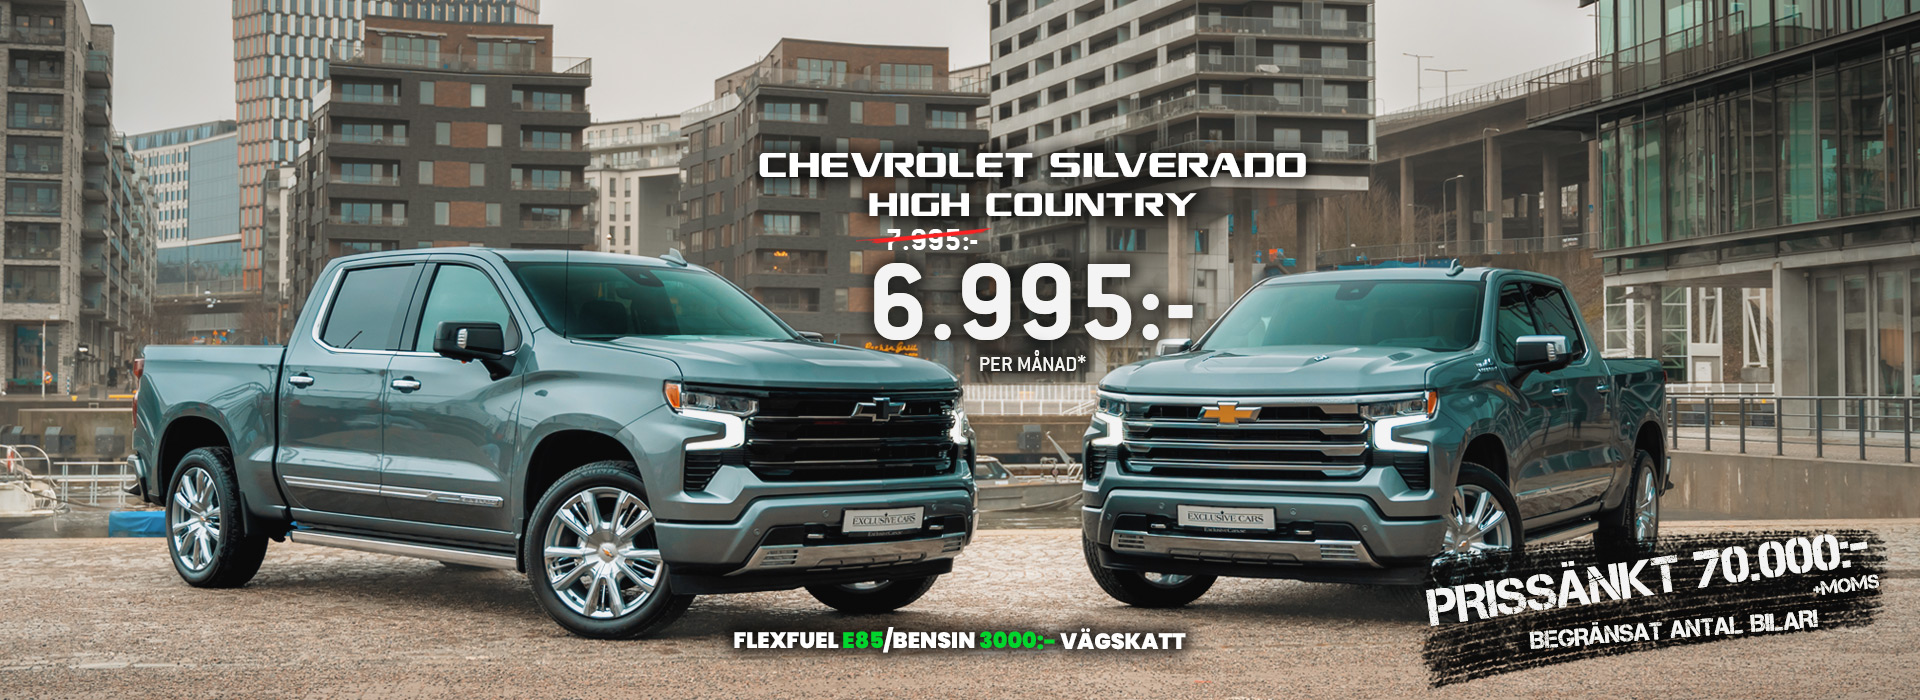 Chevrolet Silverado High Country Midnight Erbjudande Sverige GM